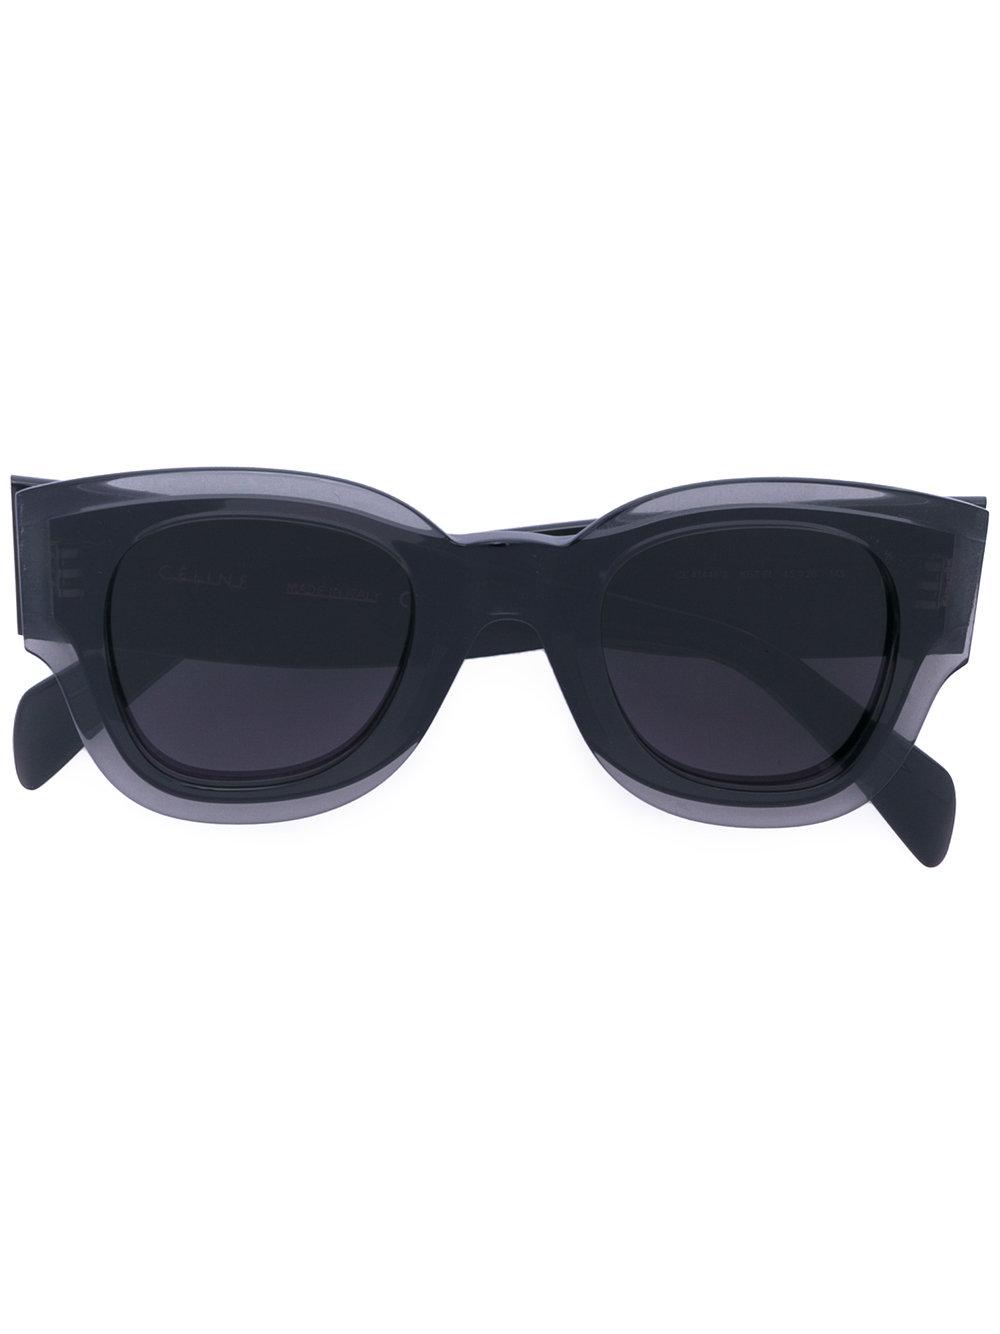 Celine Zoe Sunglasses in Black | Lyst